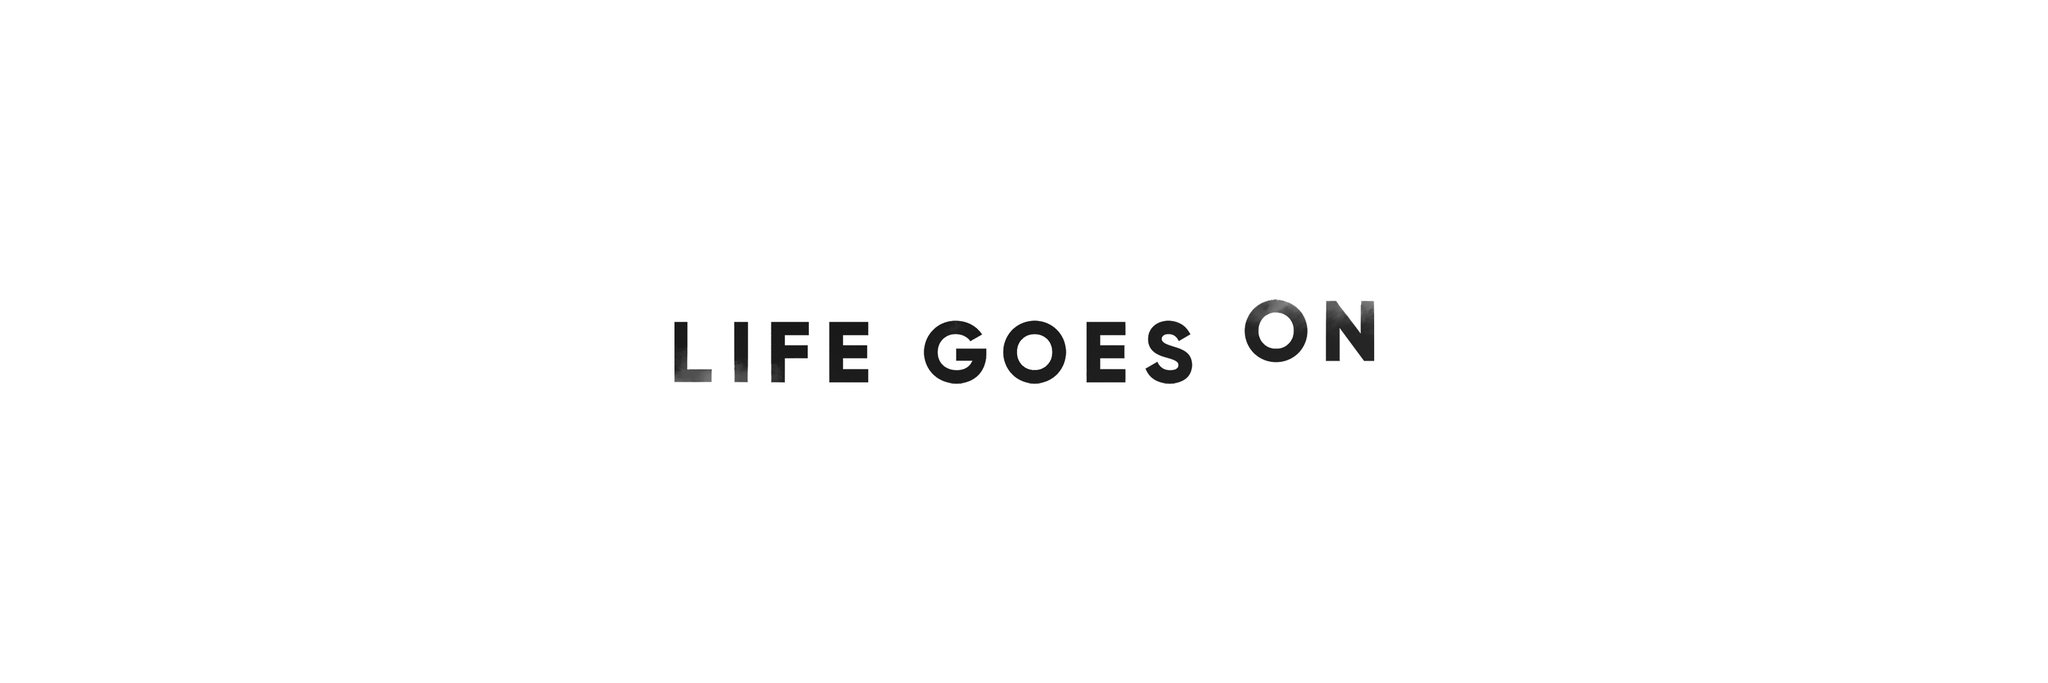 Гоу лайф. Лайф Гоес он. Life goes on BTS надпись. Life goes on надпись. Life goes on BTS logo.